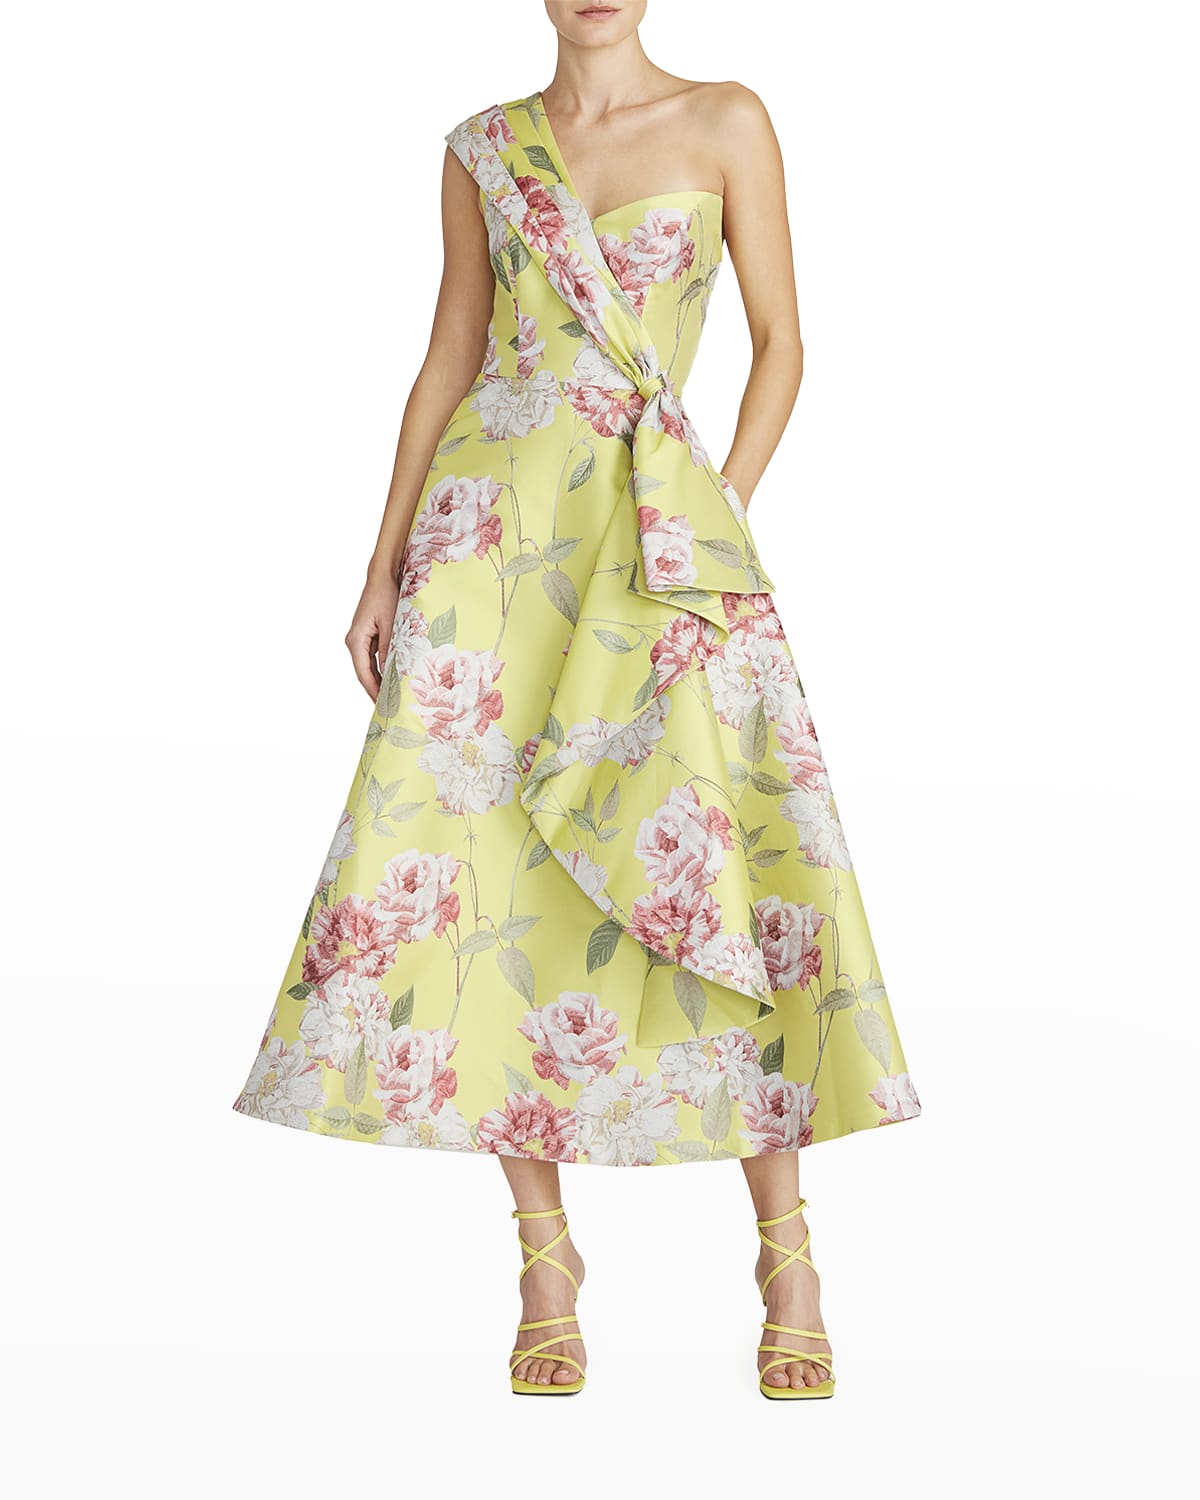 Floral Print Cocktail Dress | Neiman Marcus